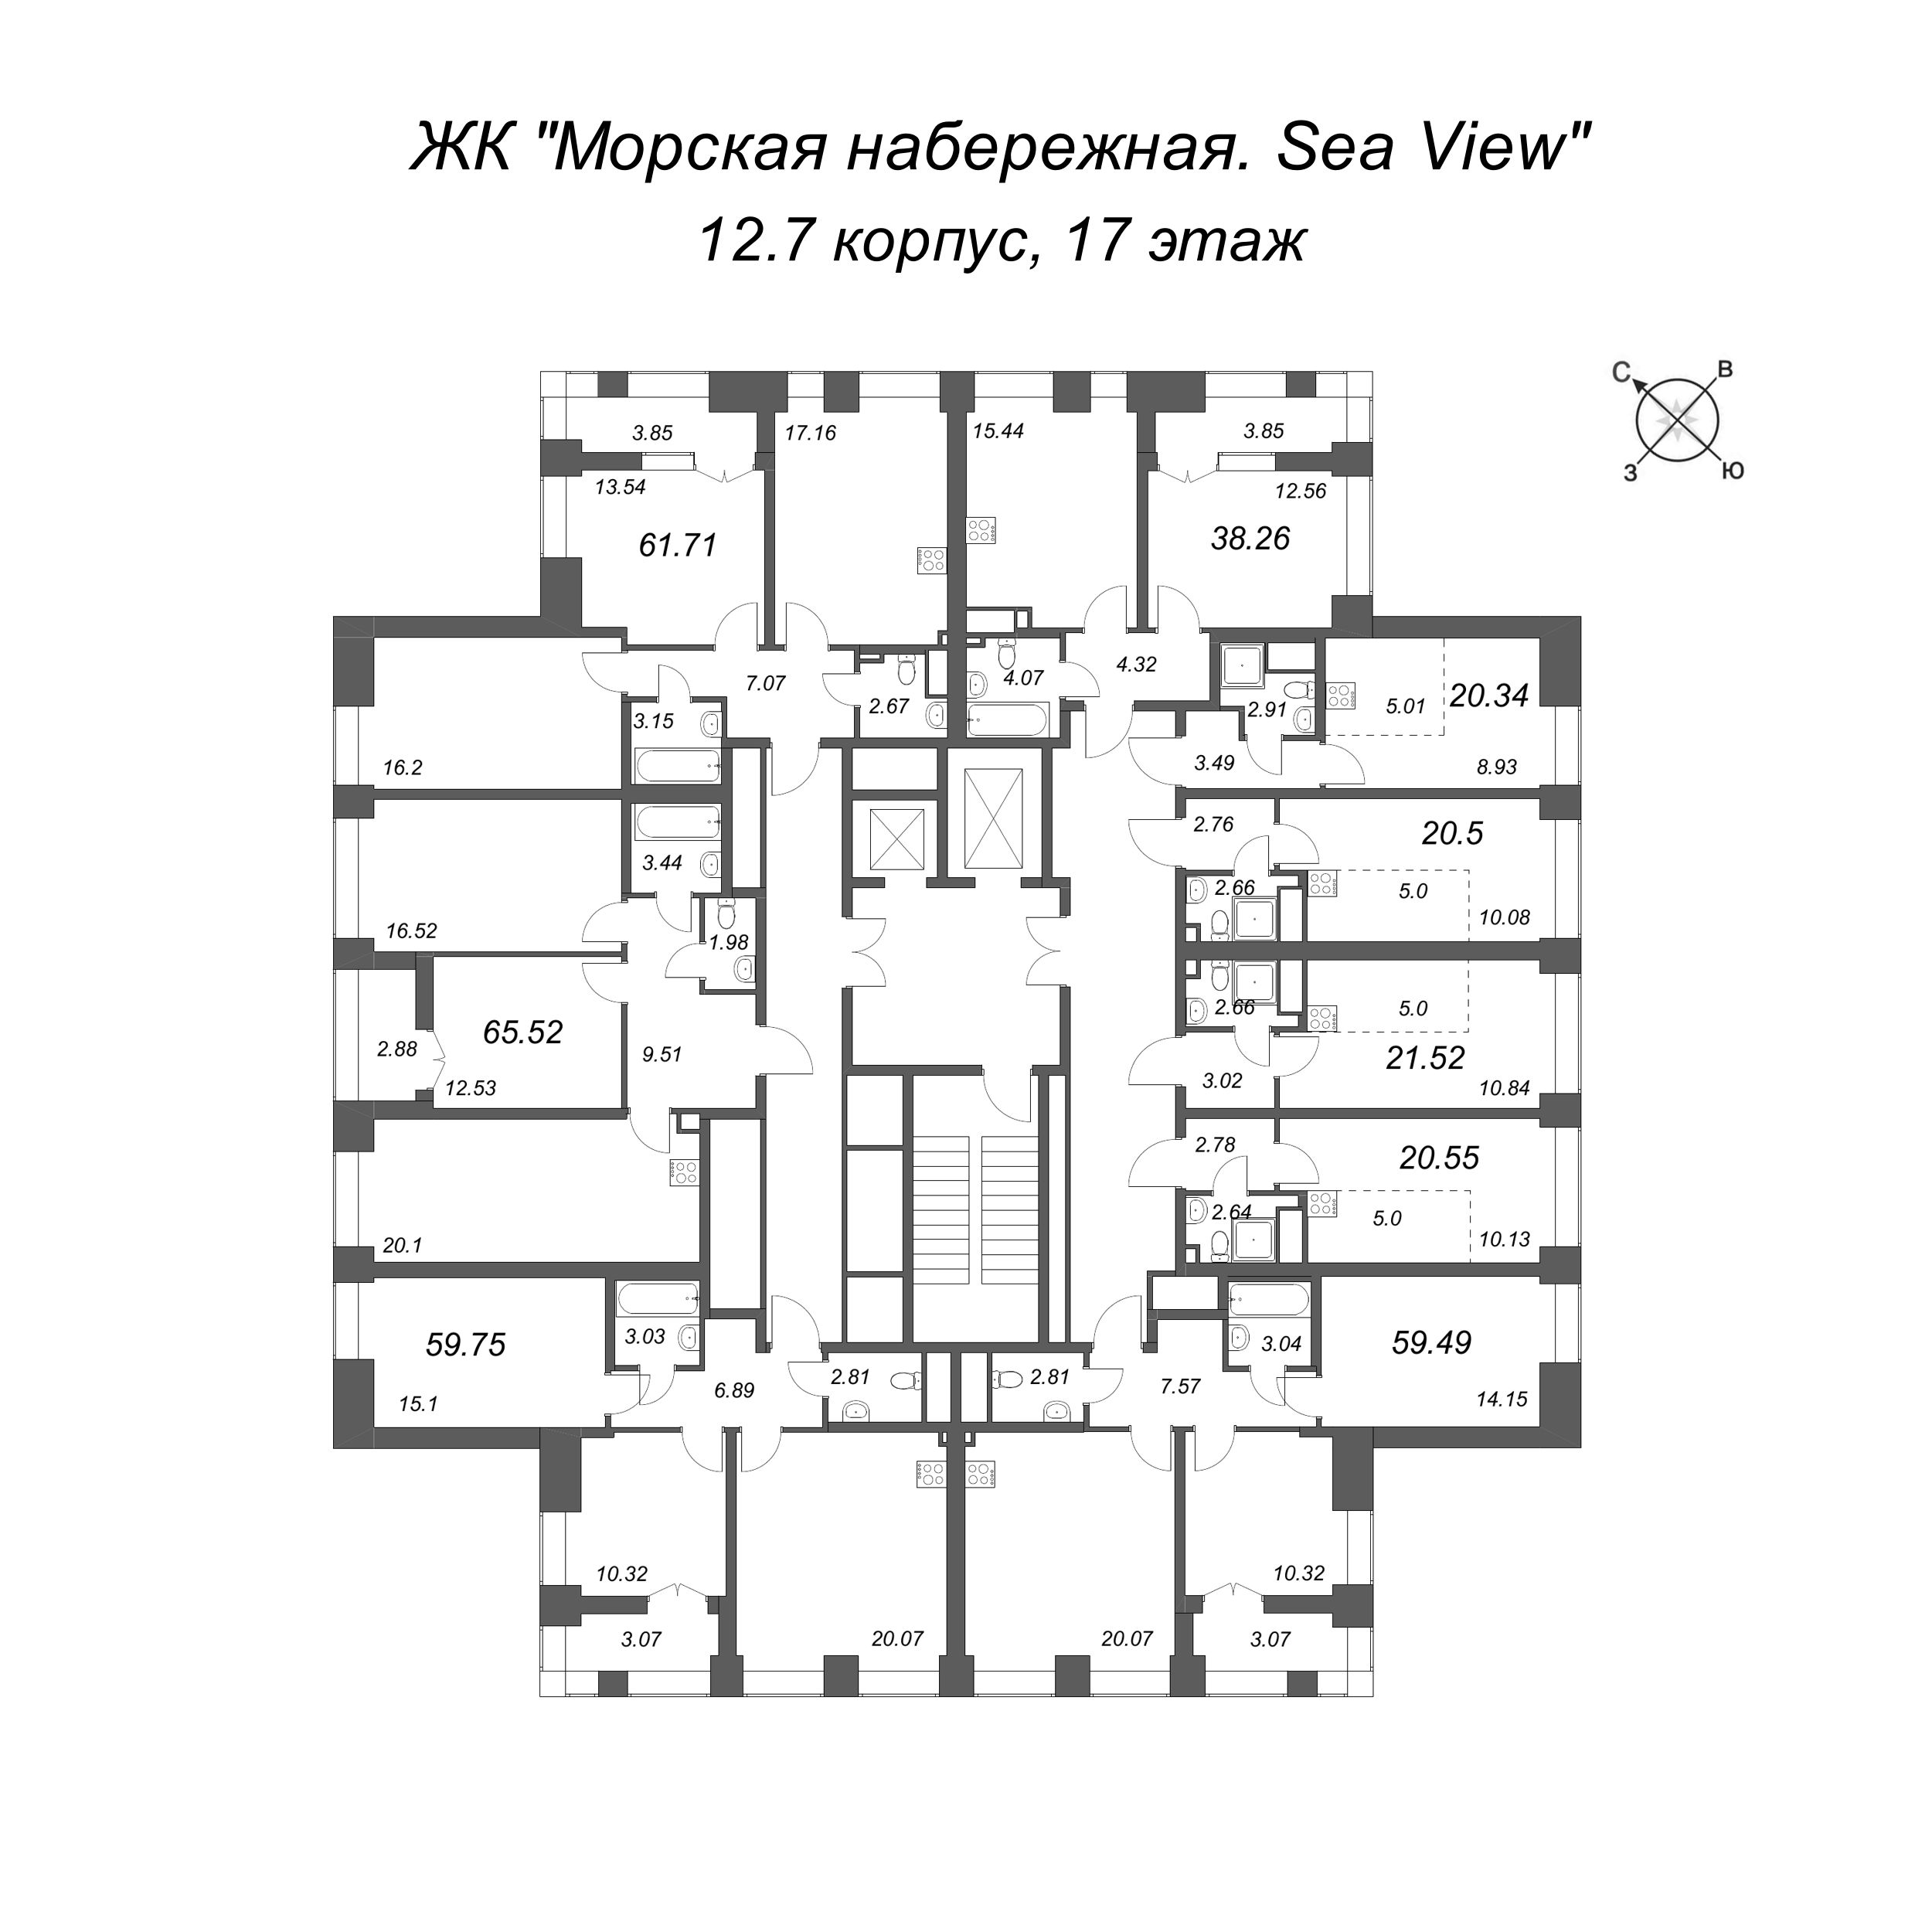 2-комнатная (Евро) квартира, 38.26 м² - планировка этажа